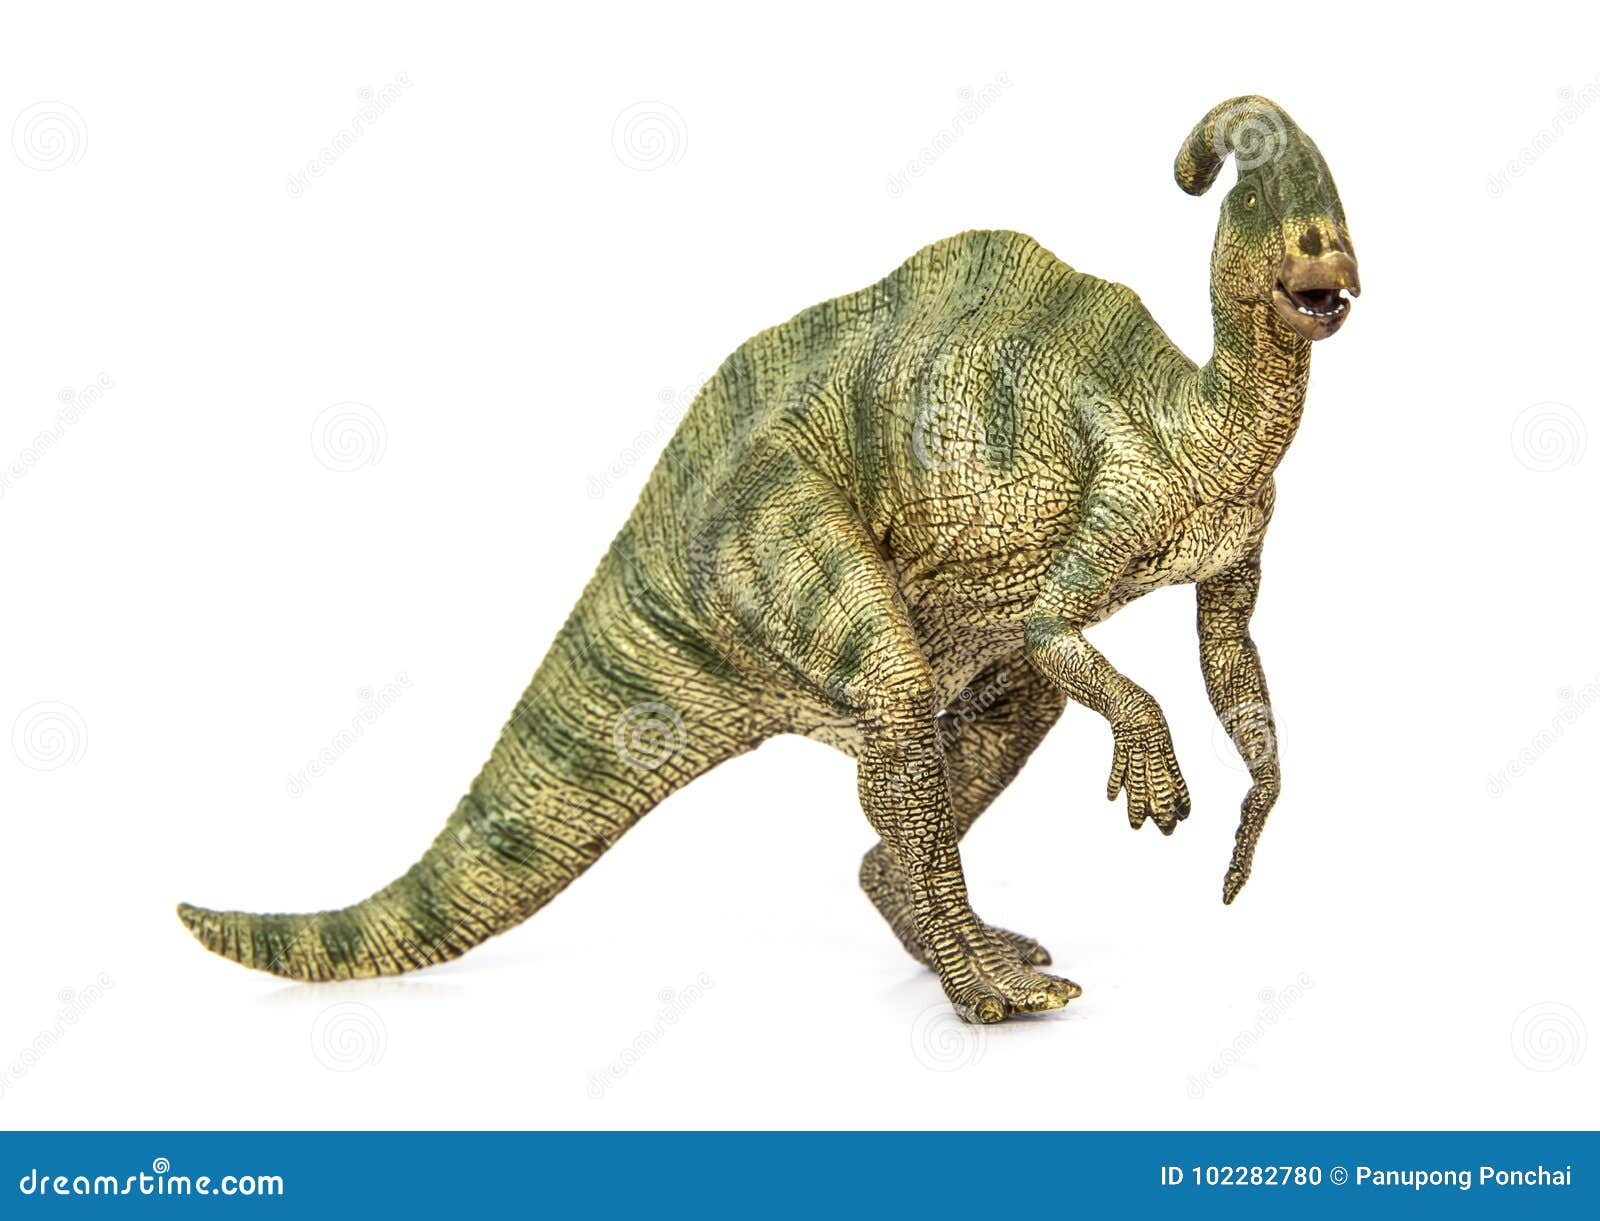 parasaurolophus dinosaurs herbivores.